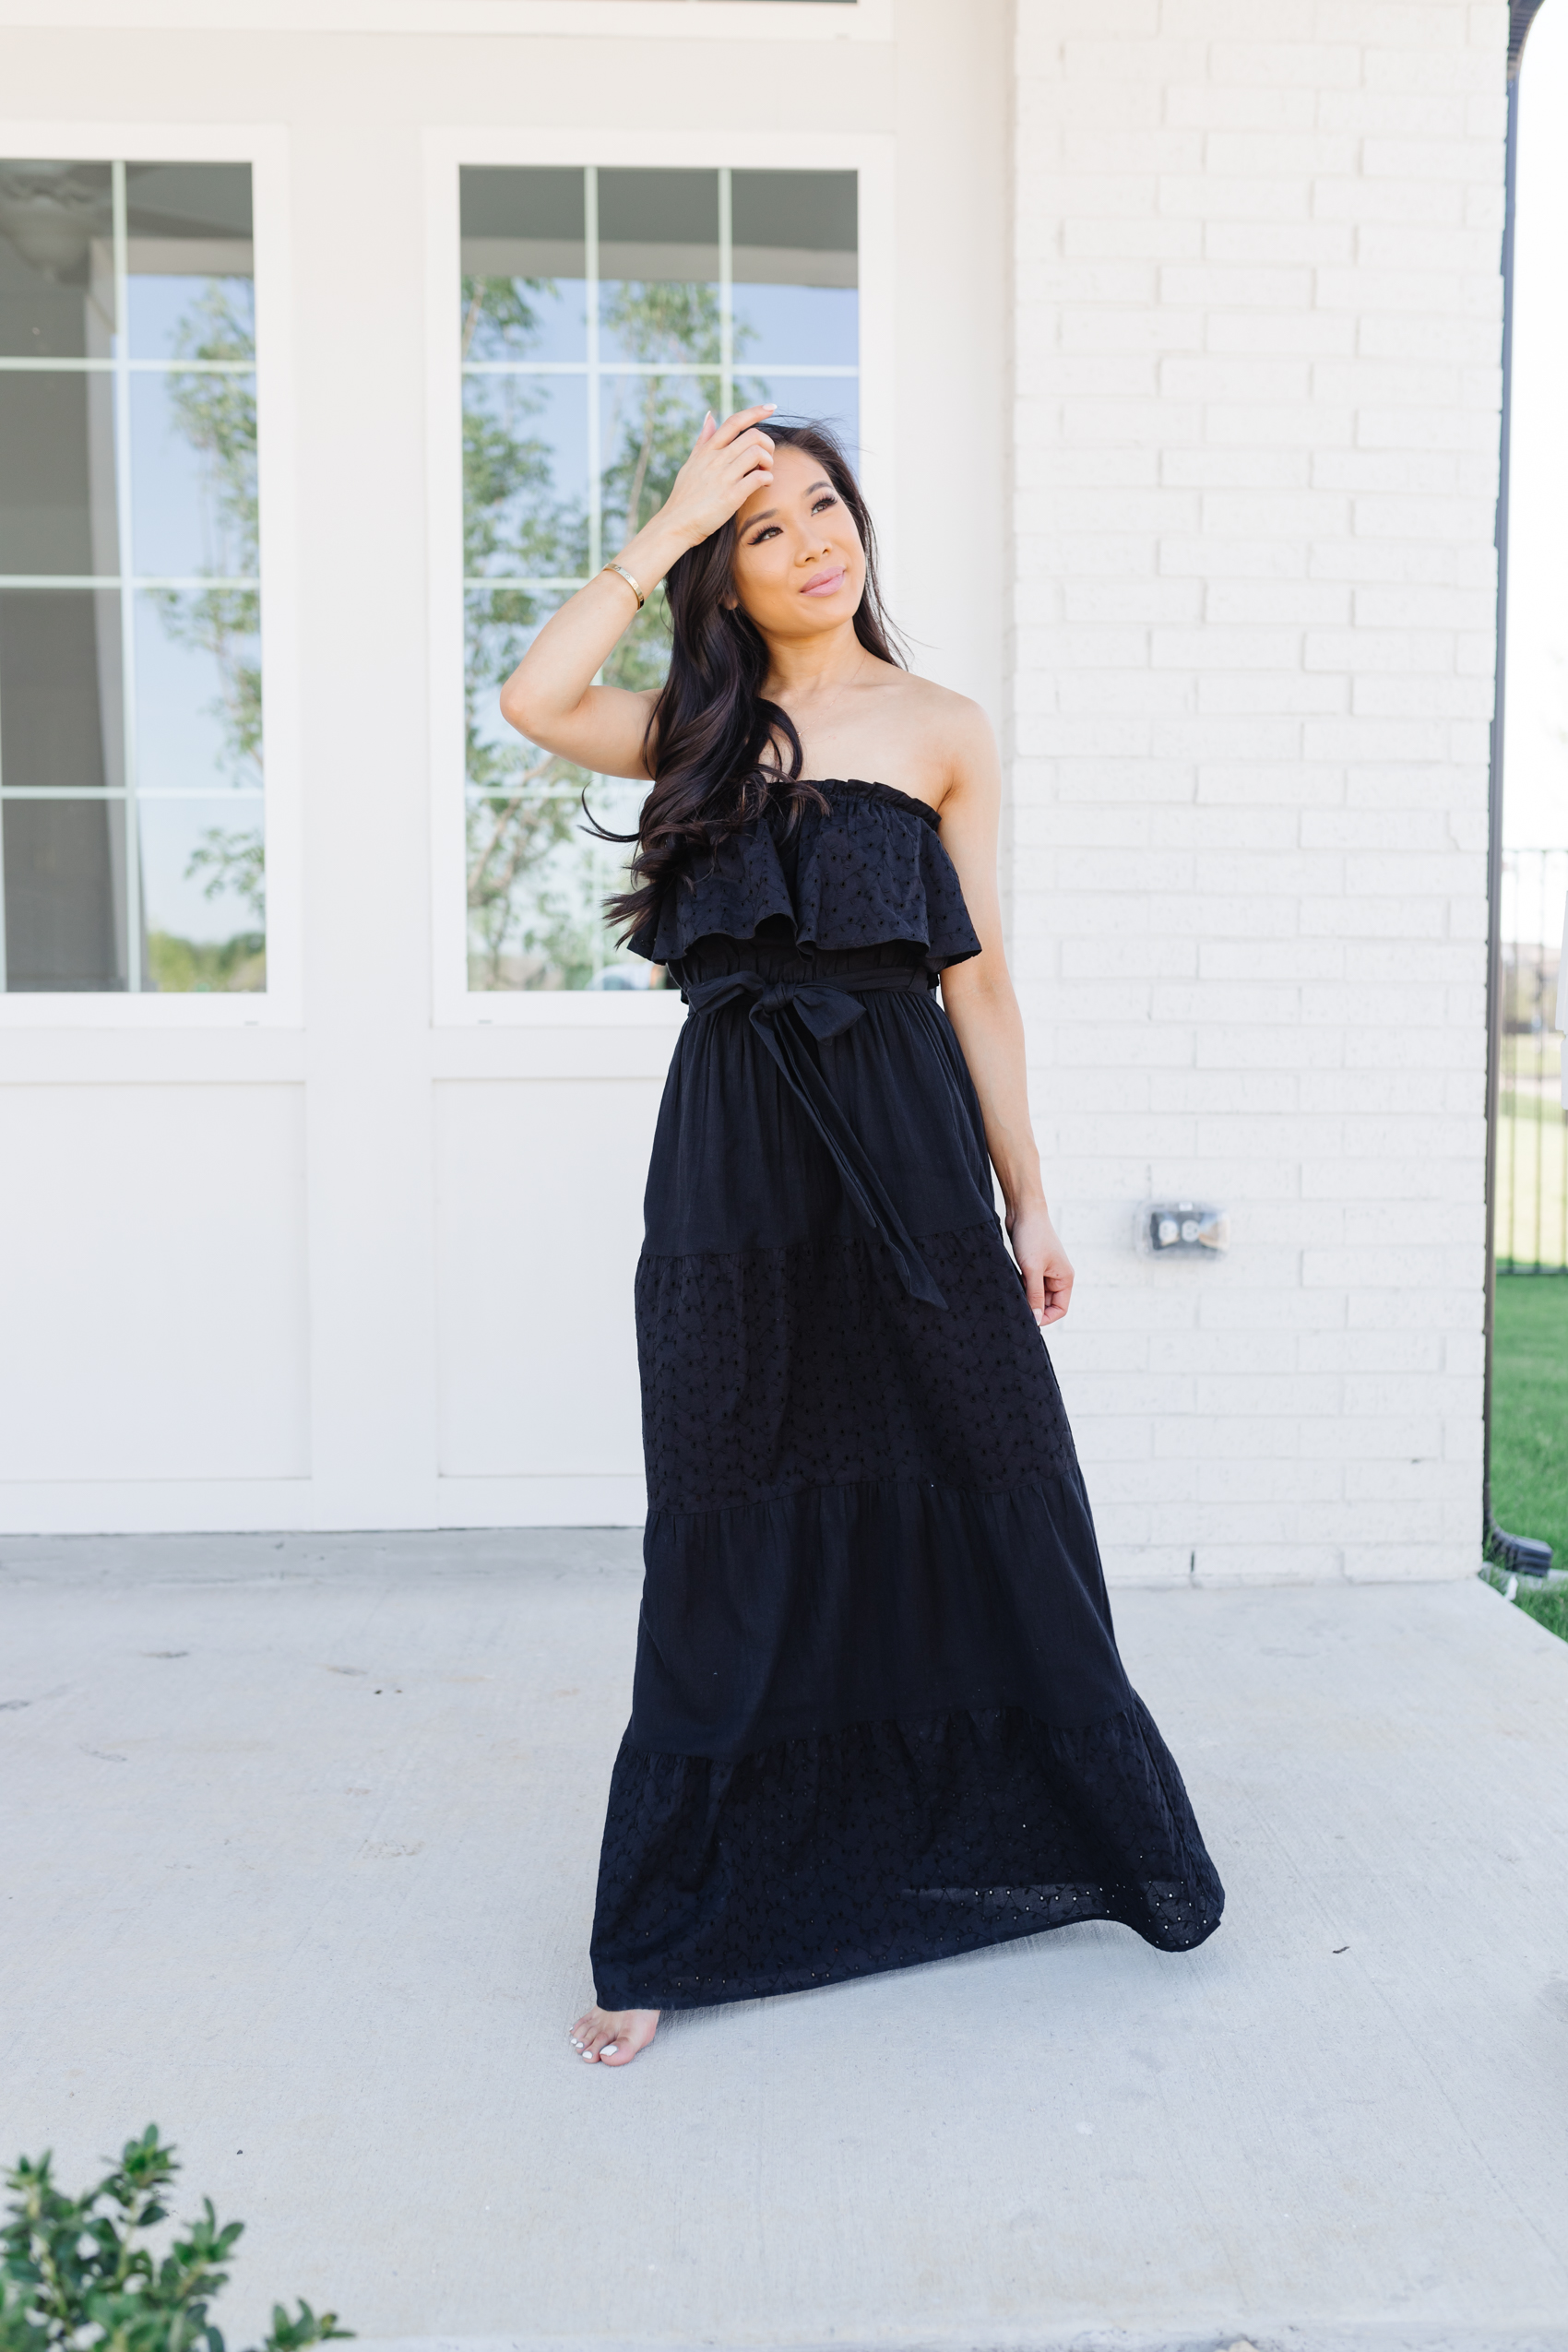 Blogger Hoang-Kim wears a black eyelet maxi dress from Sofia Vegara's Walmart Fashion collection